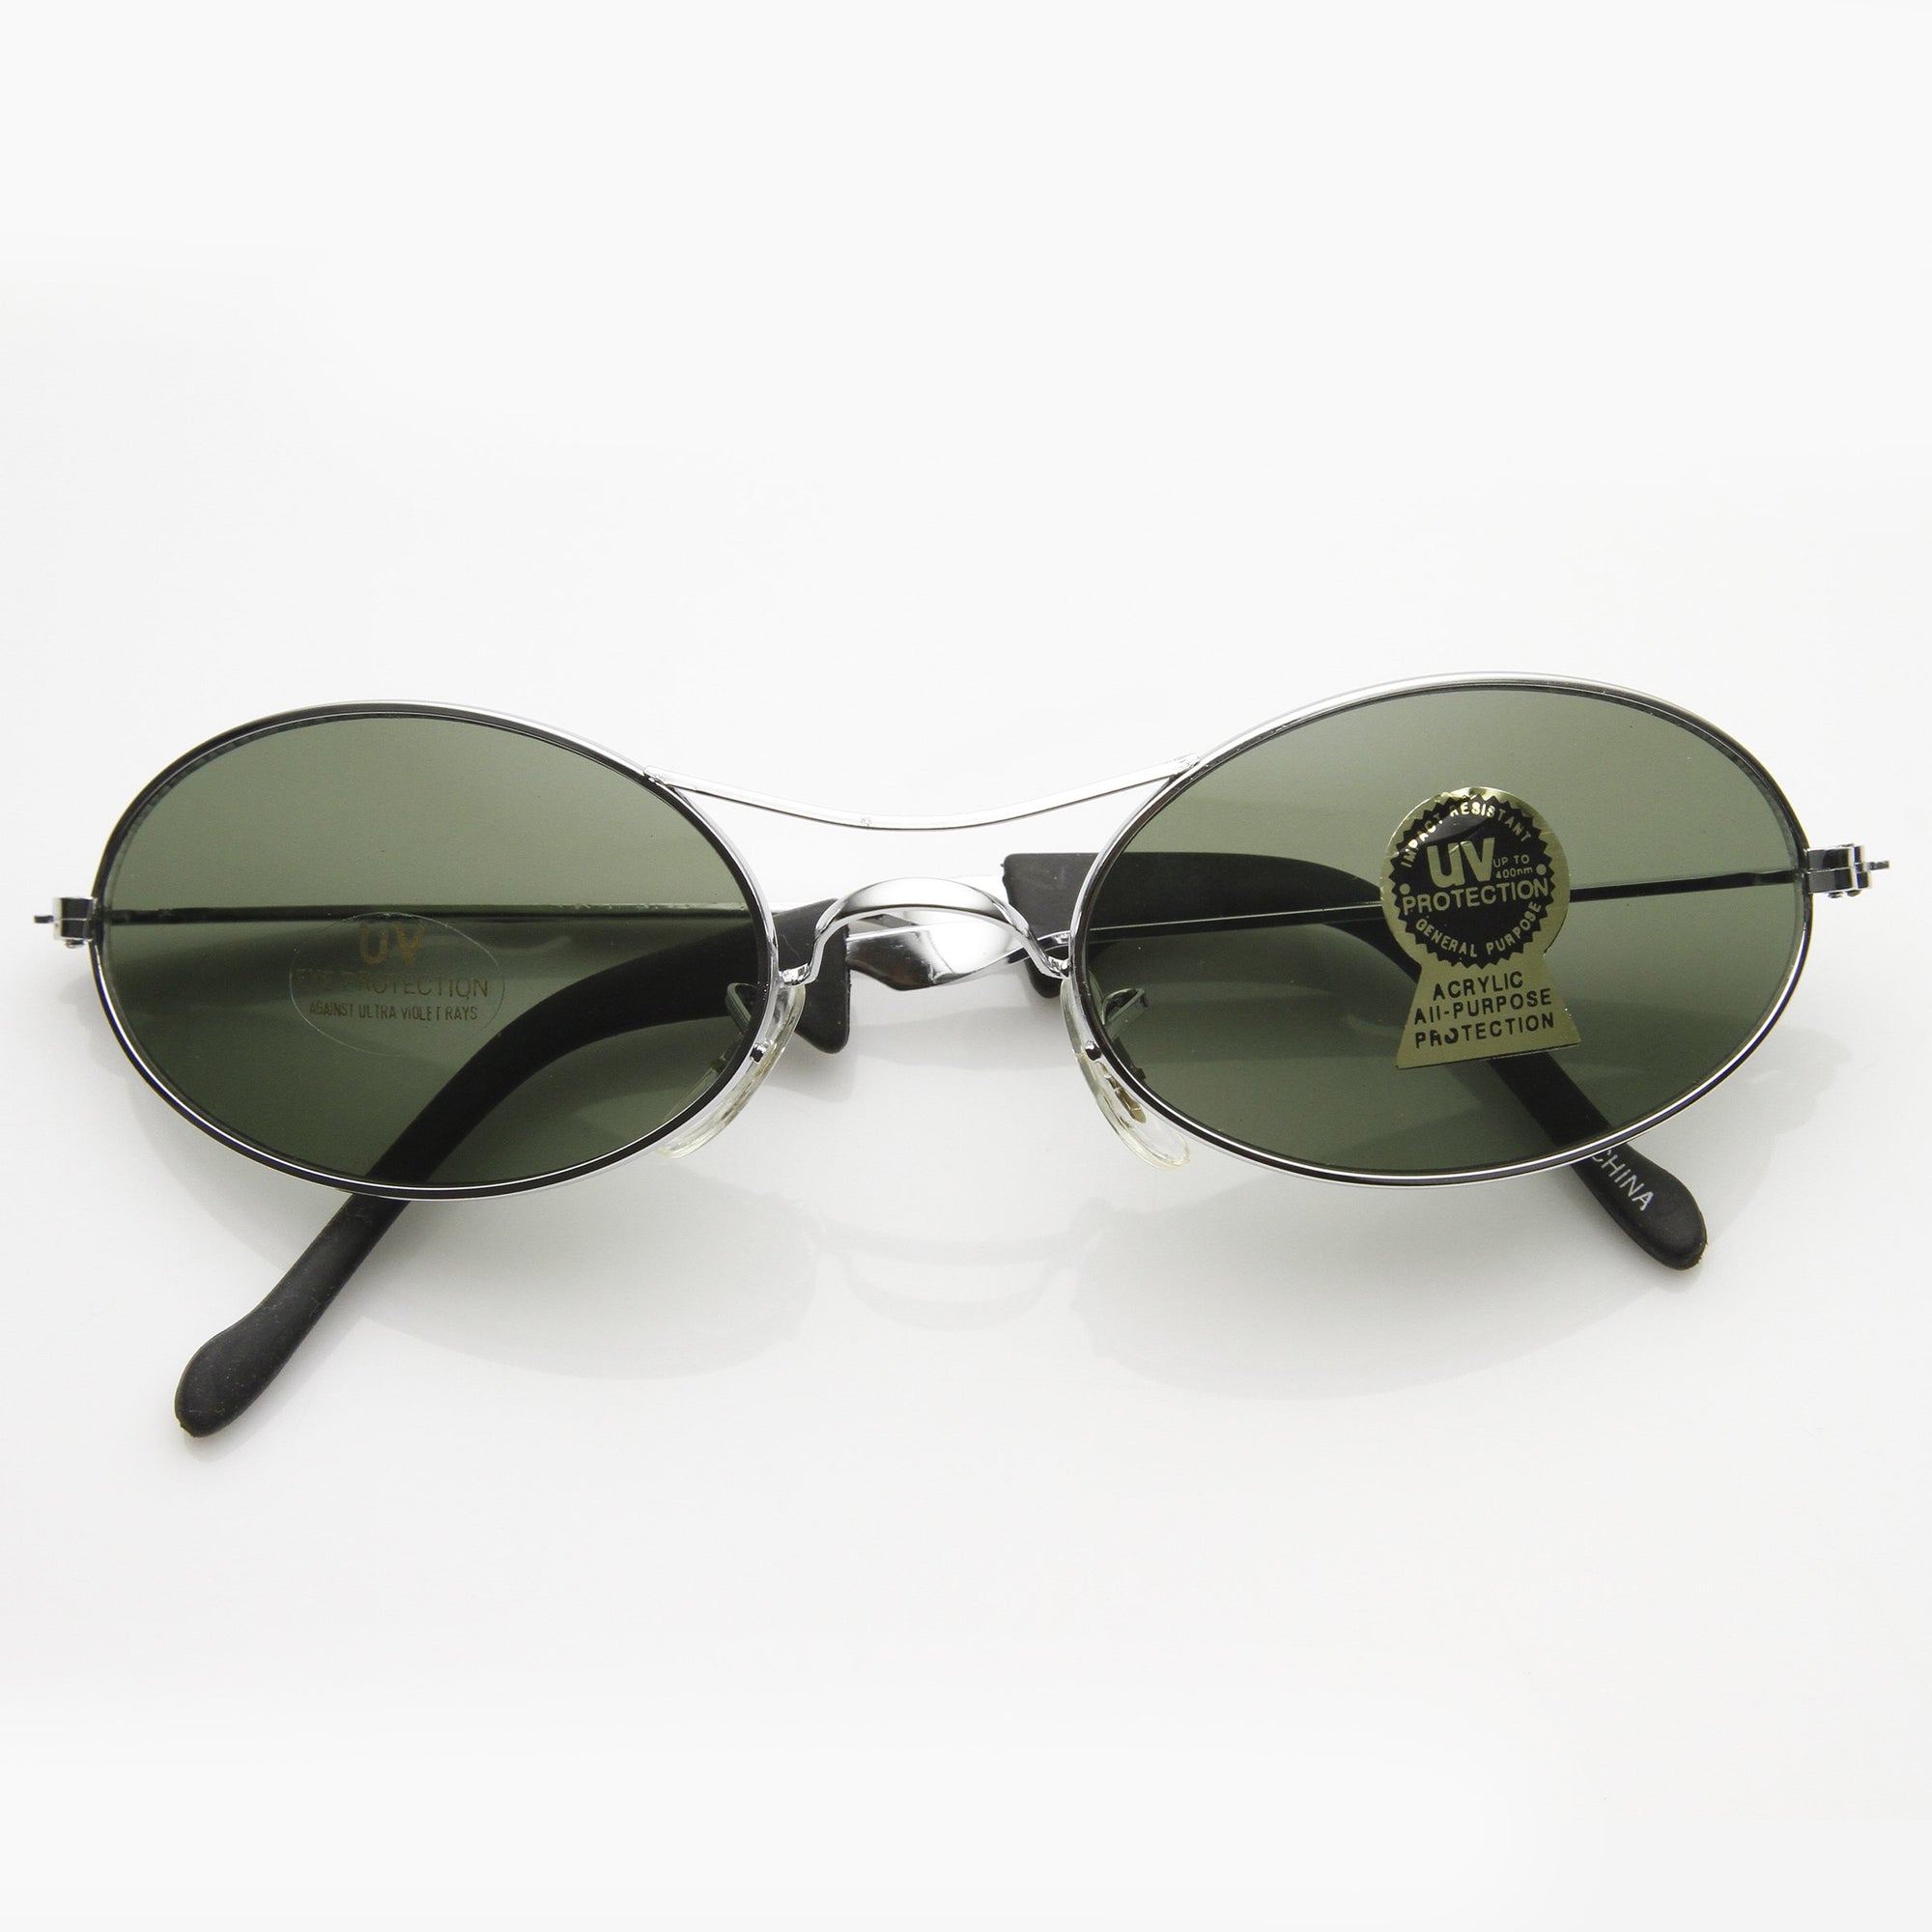 Vintage Deadstock Oval Metal Sunglasses 7017 - zeroUV